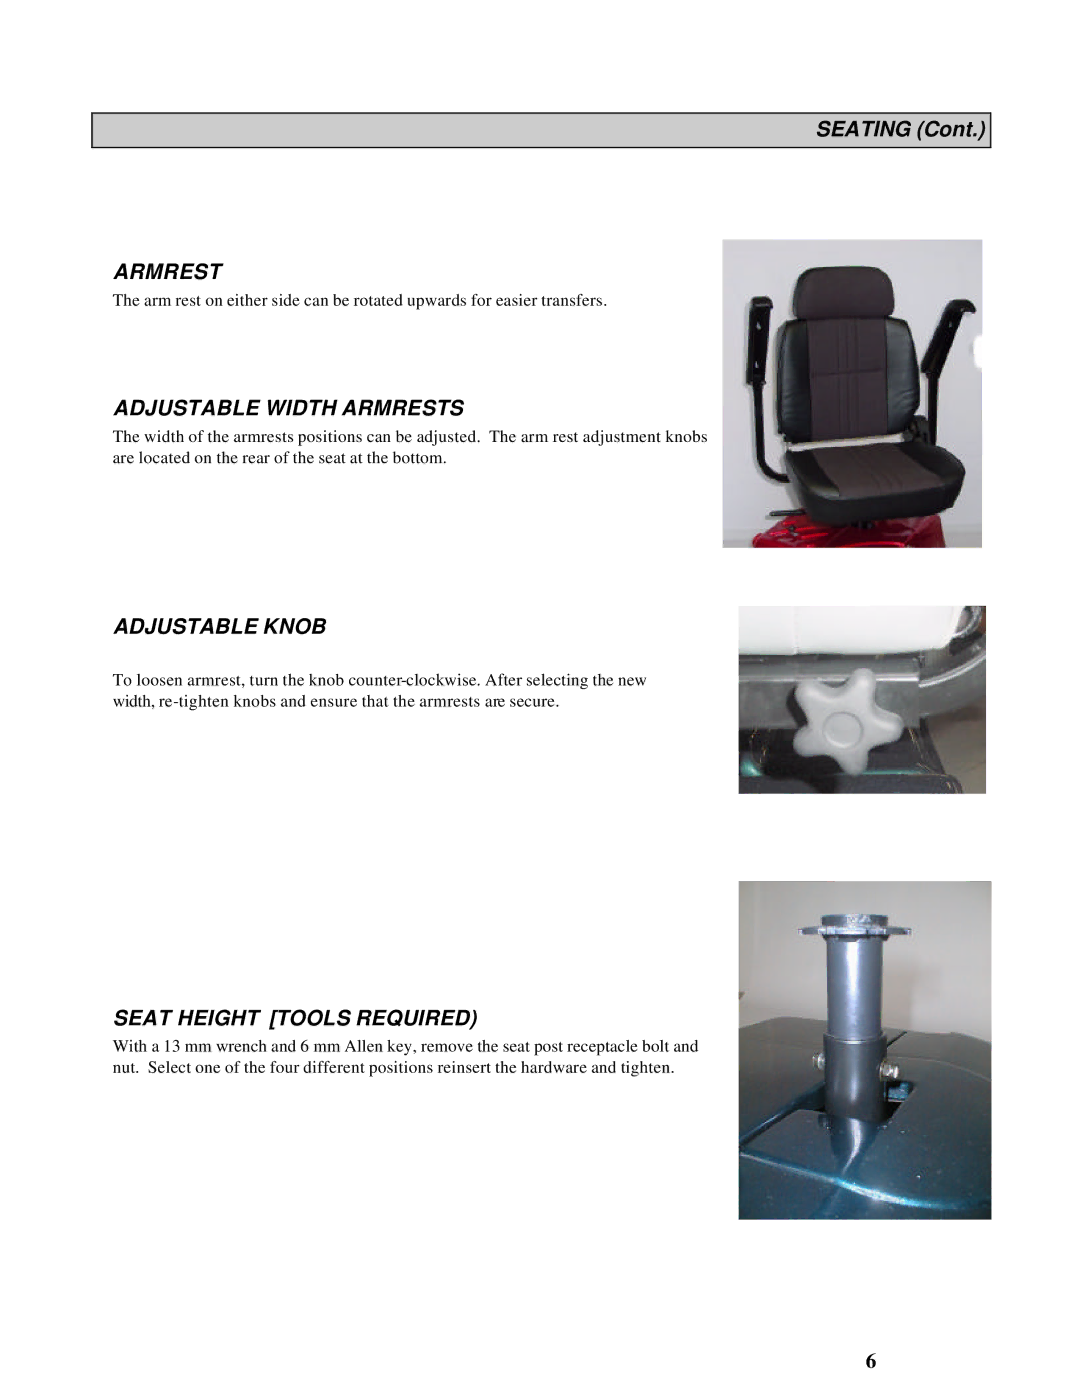 Handicare 1700 manual Adjustable Width Armrests, Adjustable Knob, Seat Height Tools Required 